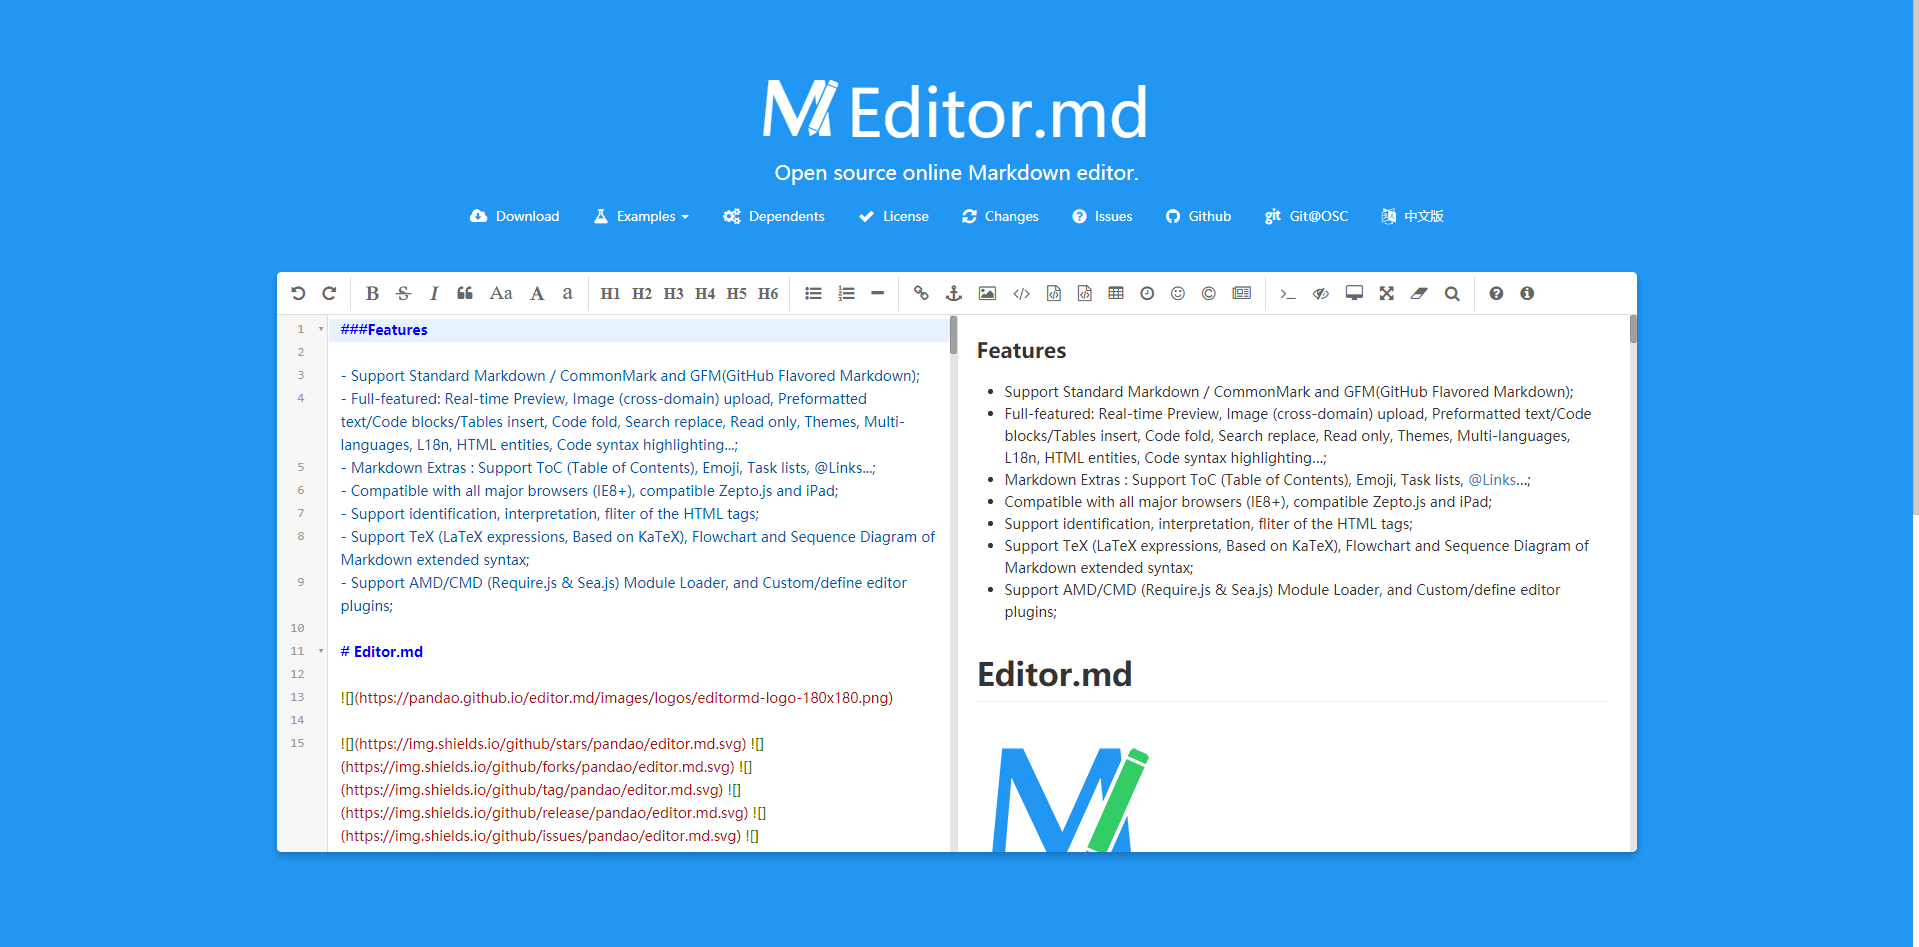 editor.md software documentation tool